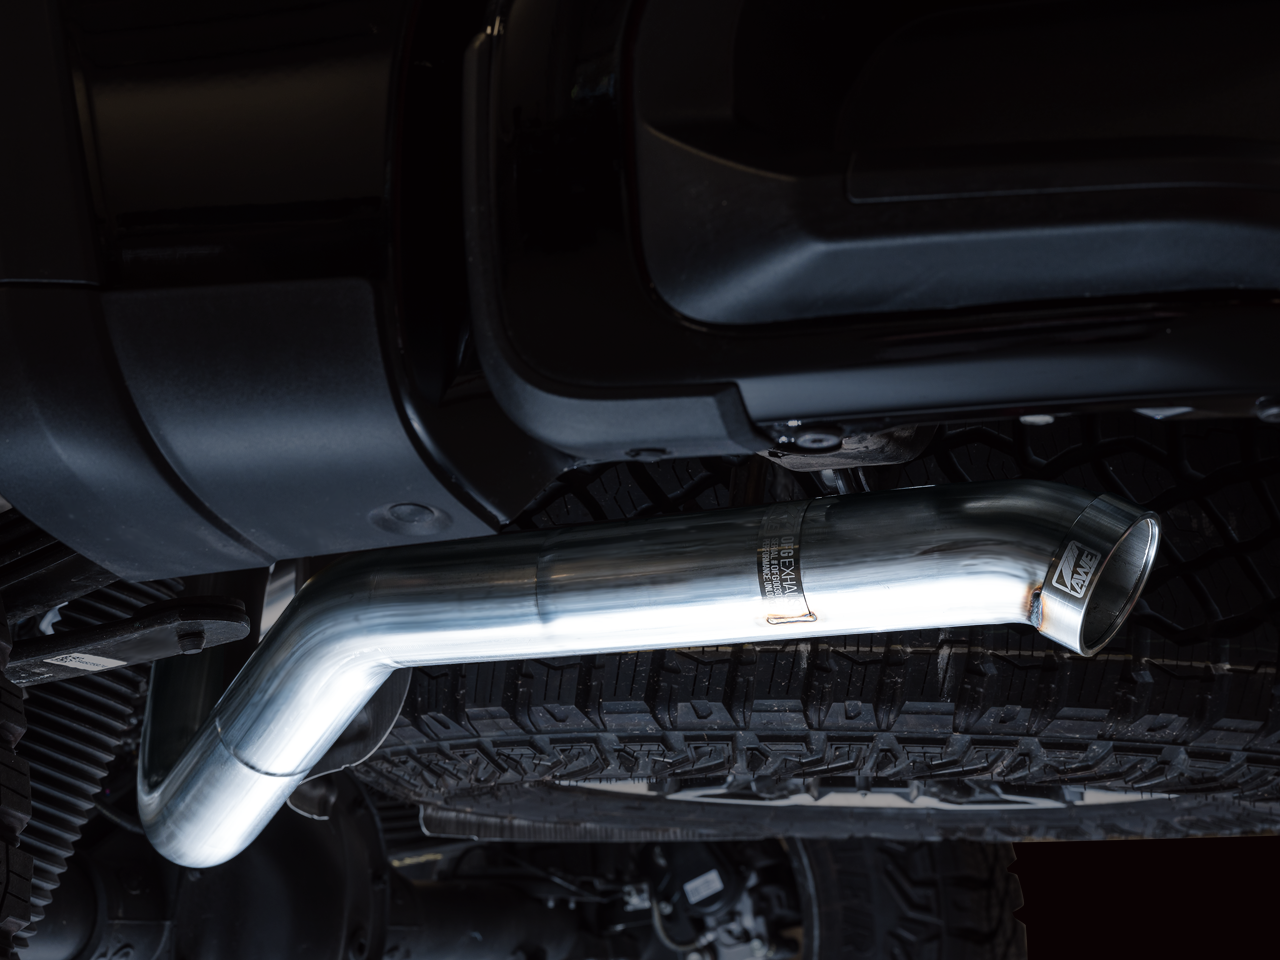 AWE 0FG Catback Exhaust for Silverado ZR2/Sierra AT4X - Dual Bashguard (no tips) (3015-31972)